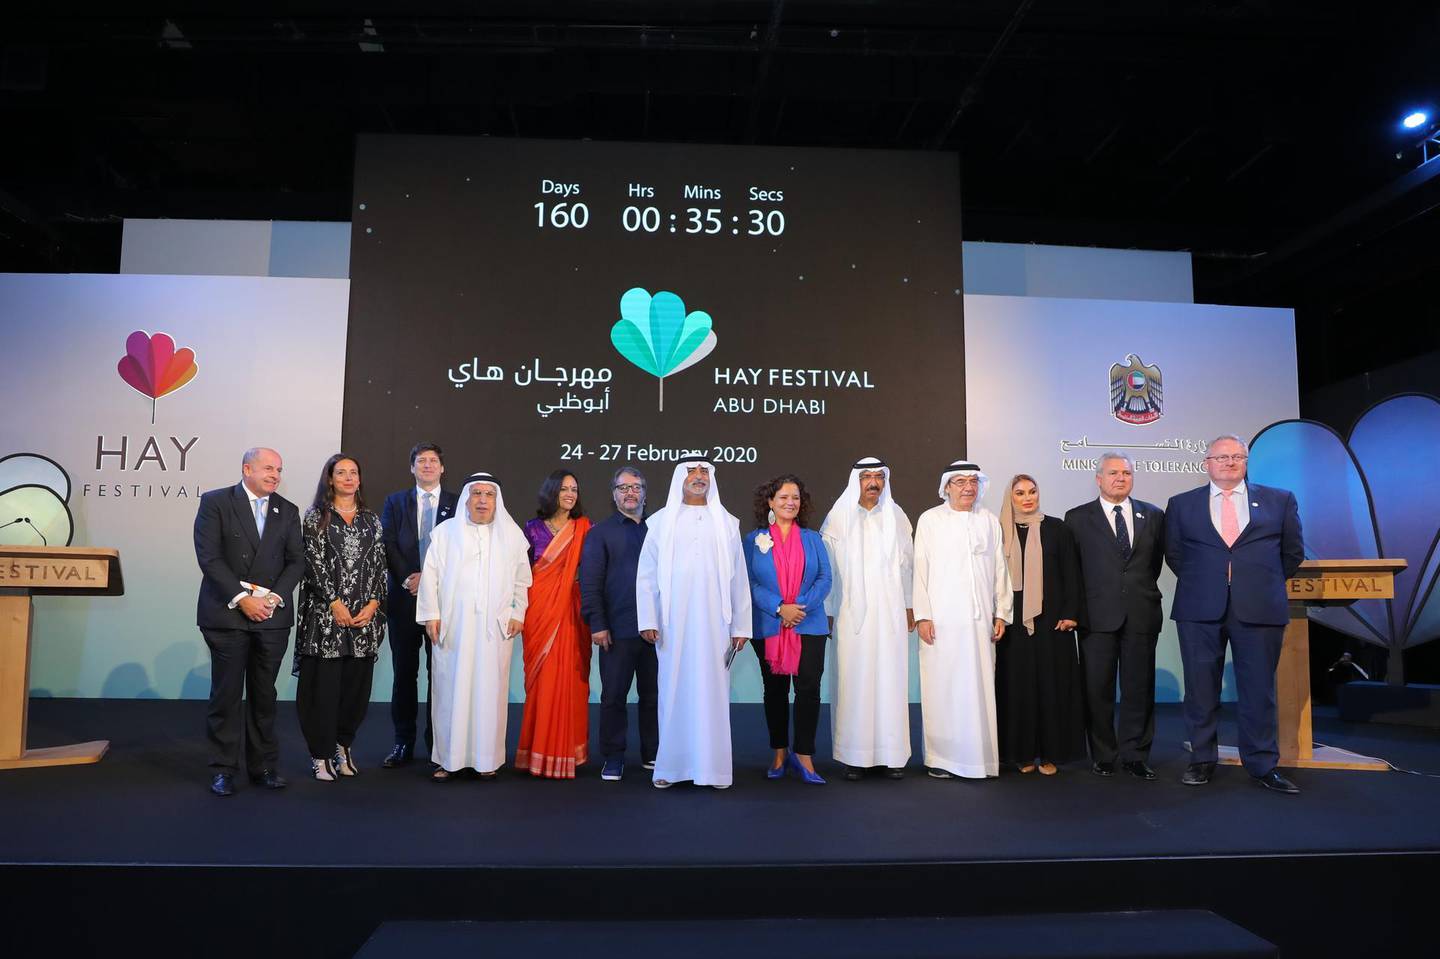 Hay Festival Abu Dhabi was announced by Sheikh Nahayan Mabarak Al Nahyan (centre), Minister of Tolerance, at Manarat Al Saadiyat